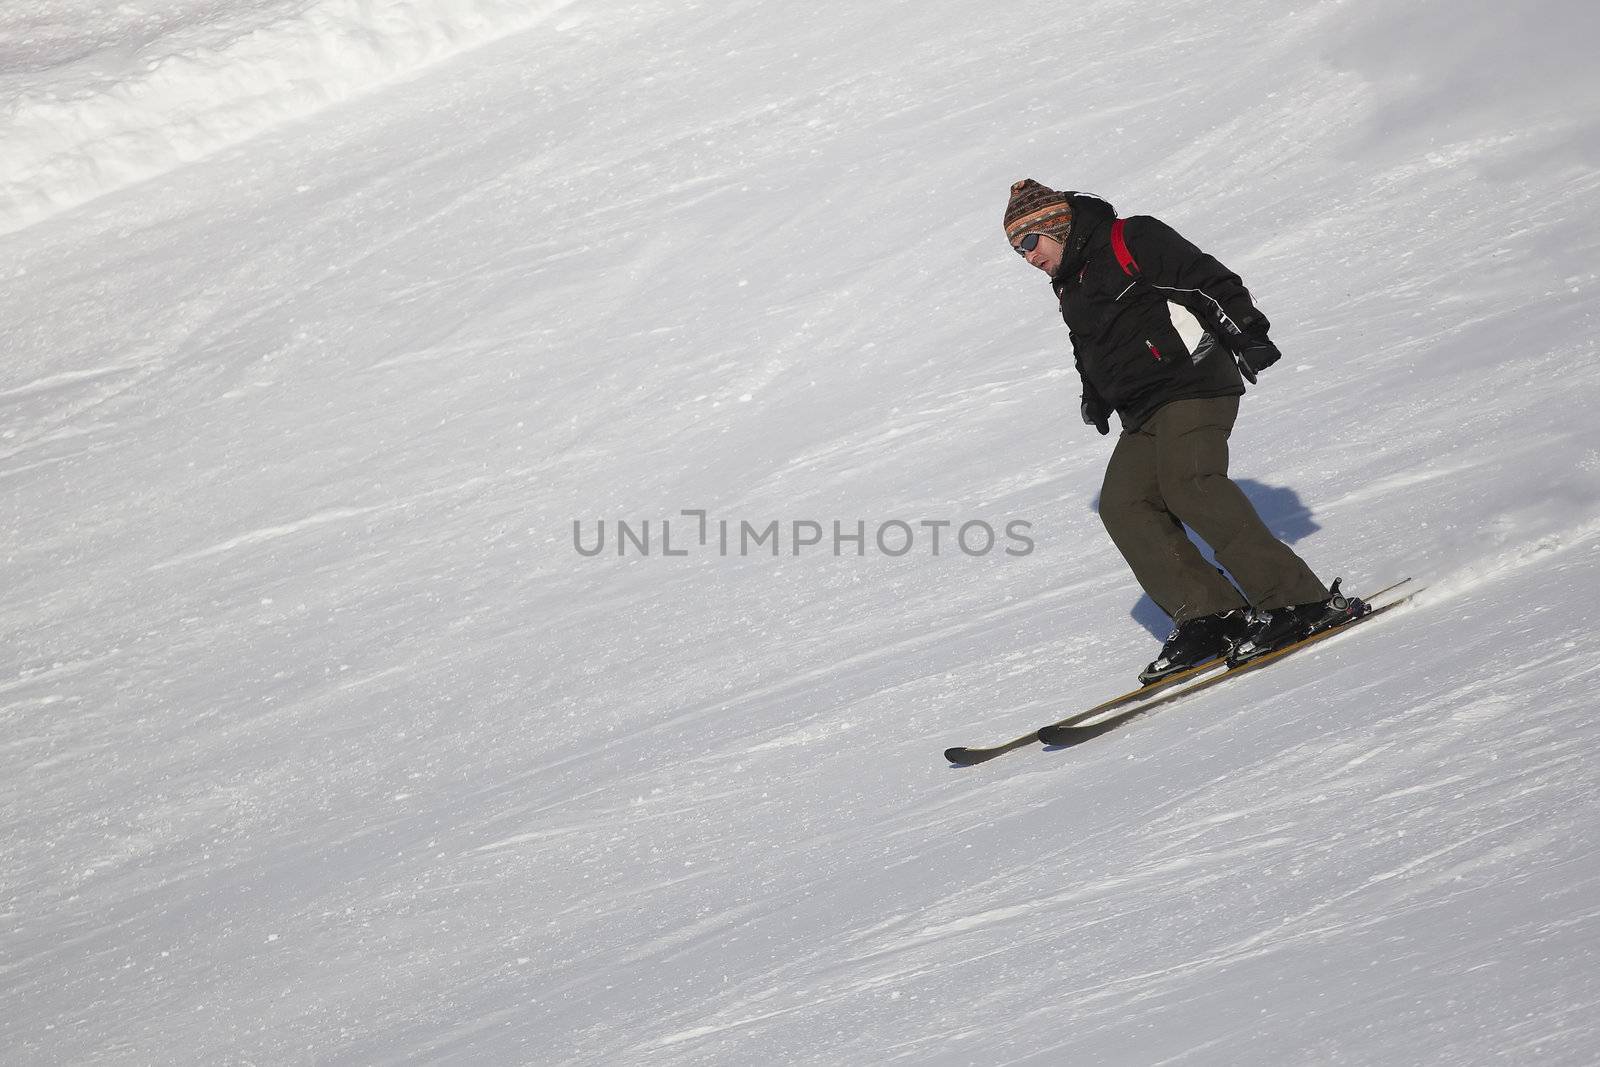 man skiing on the slope - italian dolomites